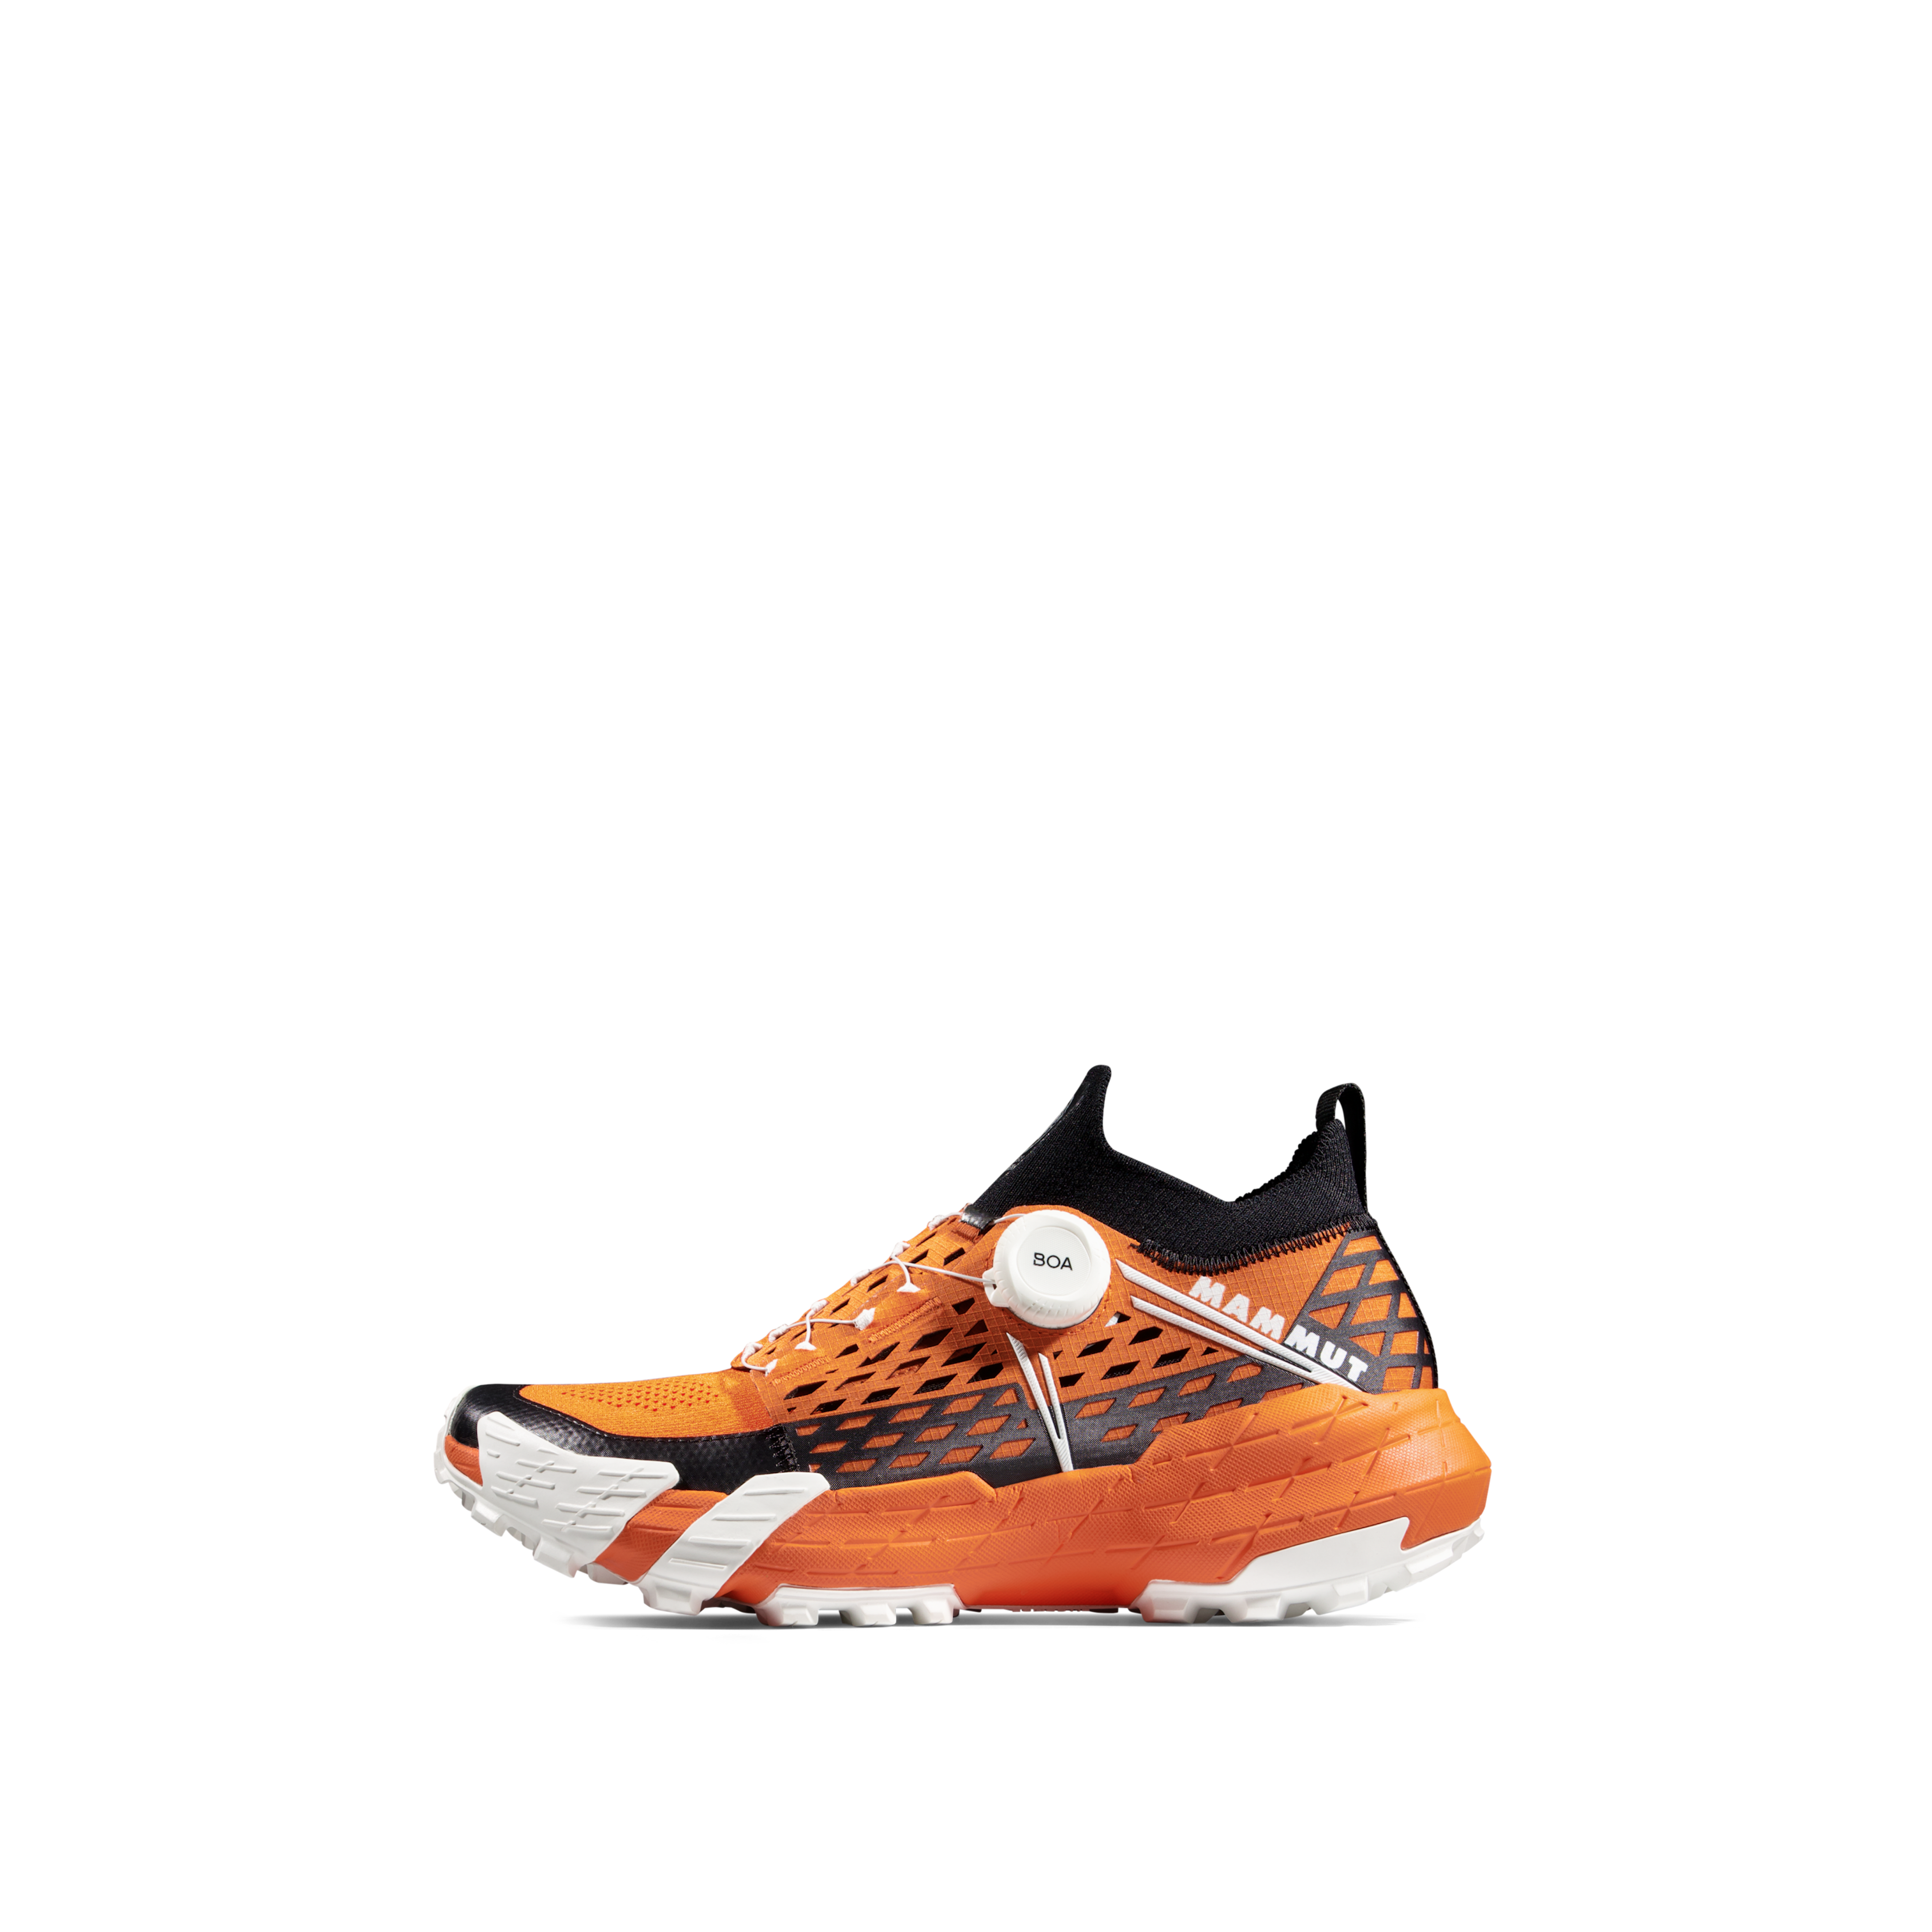 Mammut shoes in orange